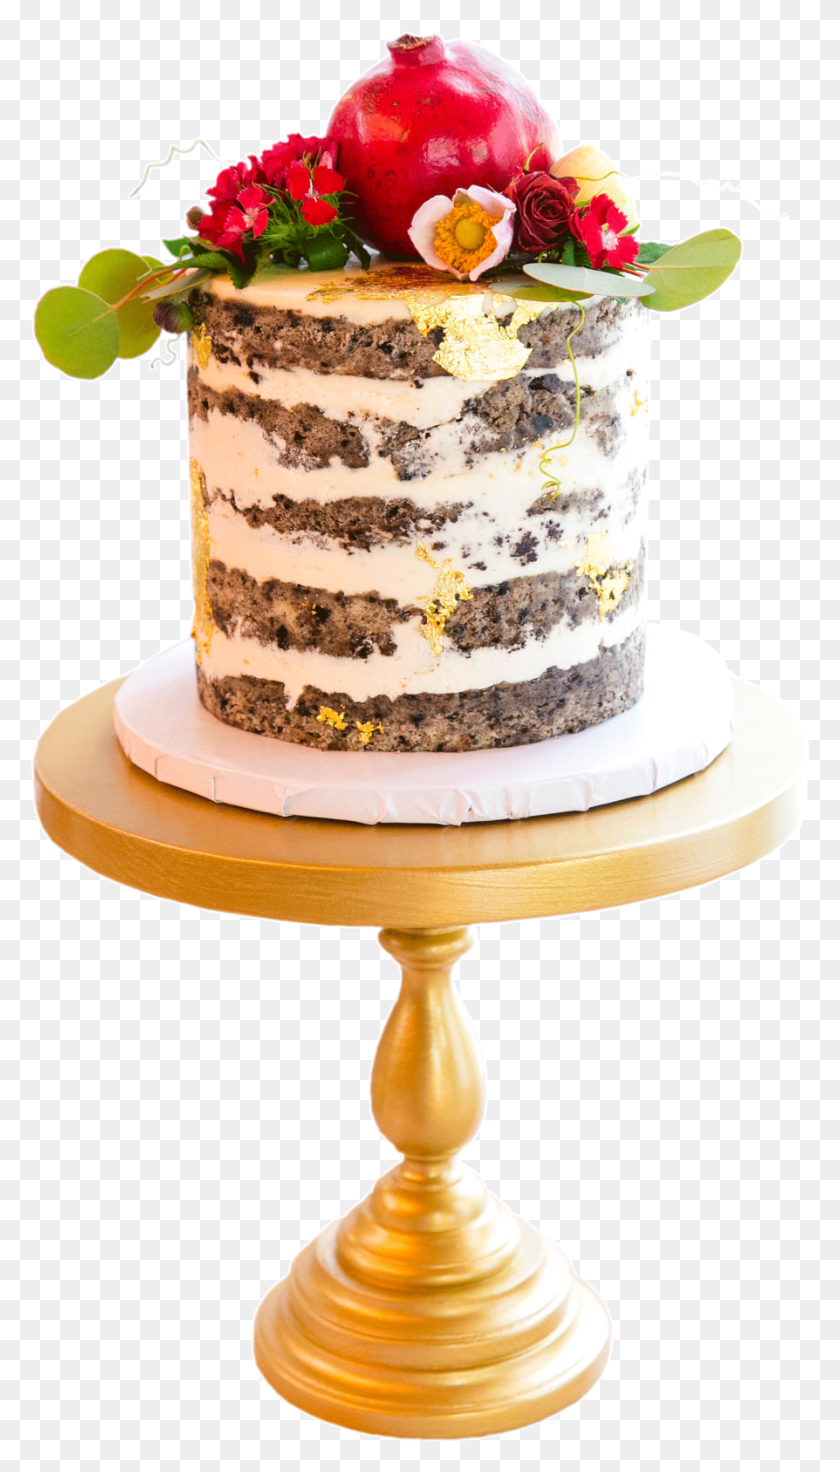 894x1619 Charleston Bakery Fruit Cake, Десерт, Еда, Свадебный Торт Png Скачать